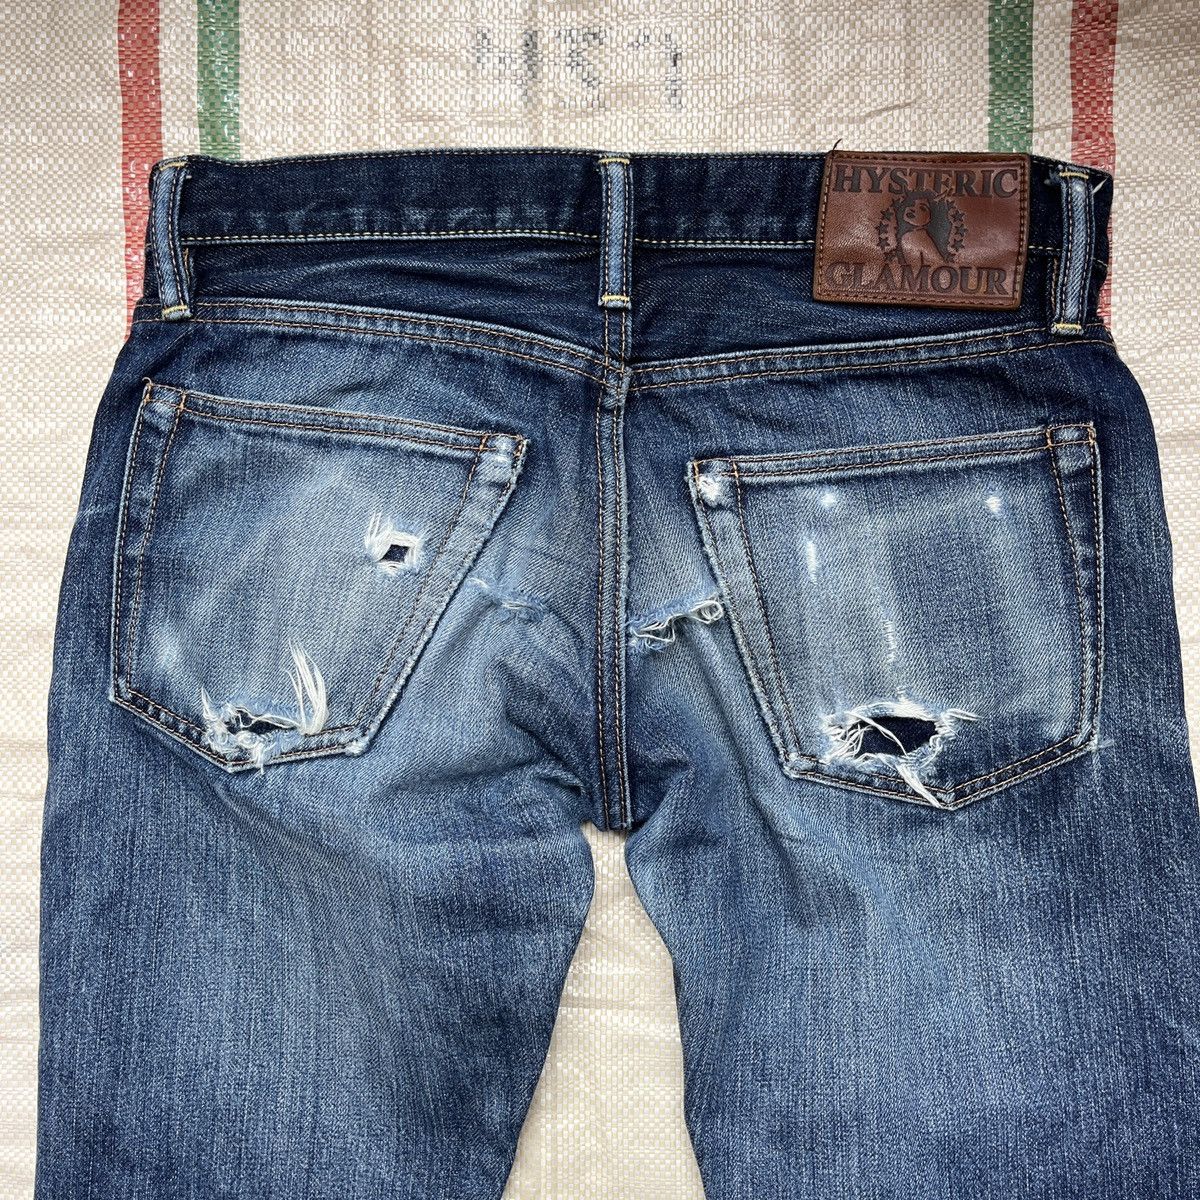 Vintage - Redline Selvedge Hystoric Glamour Denim Jeans Distressed - 21